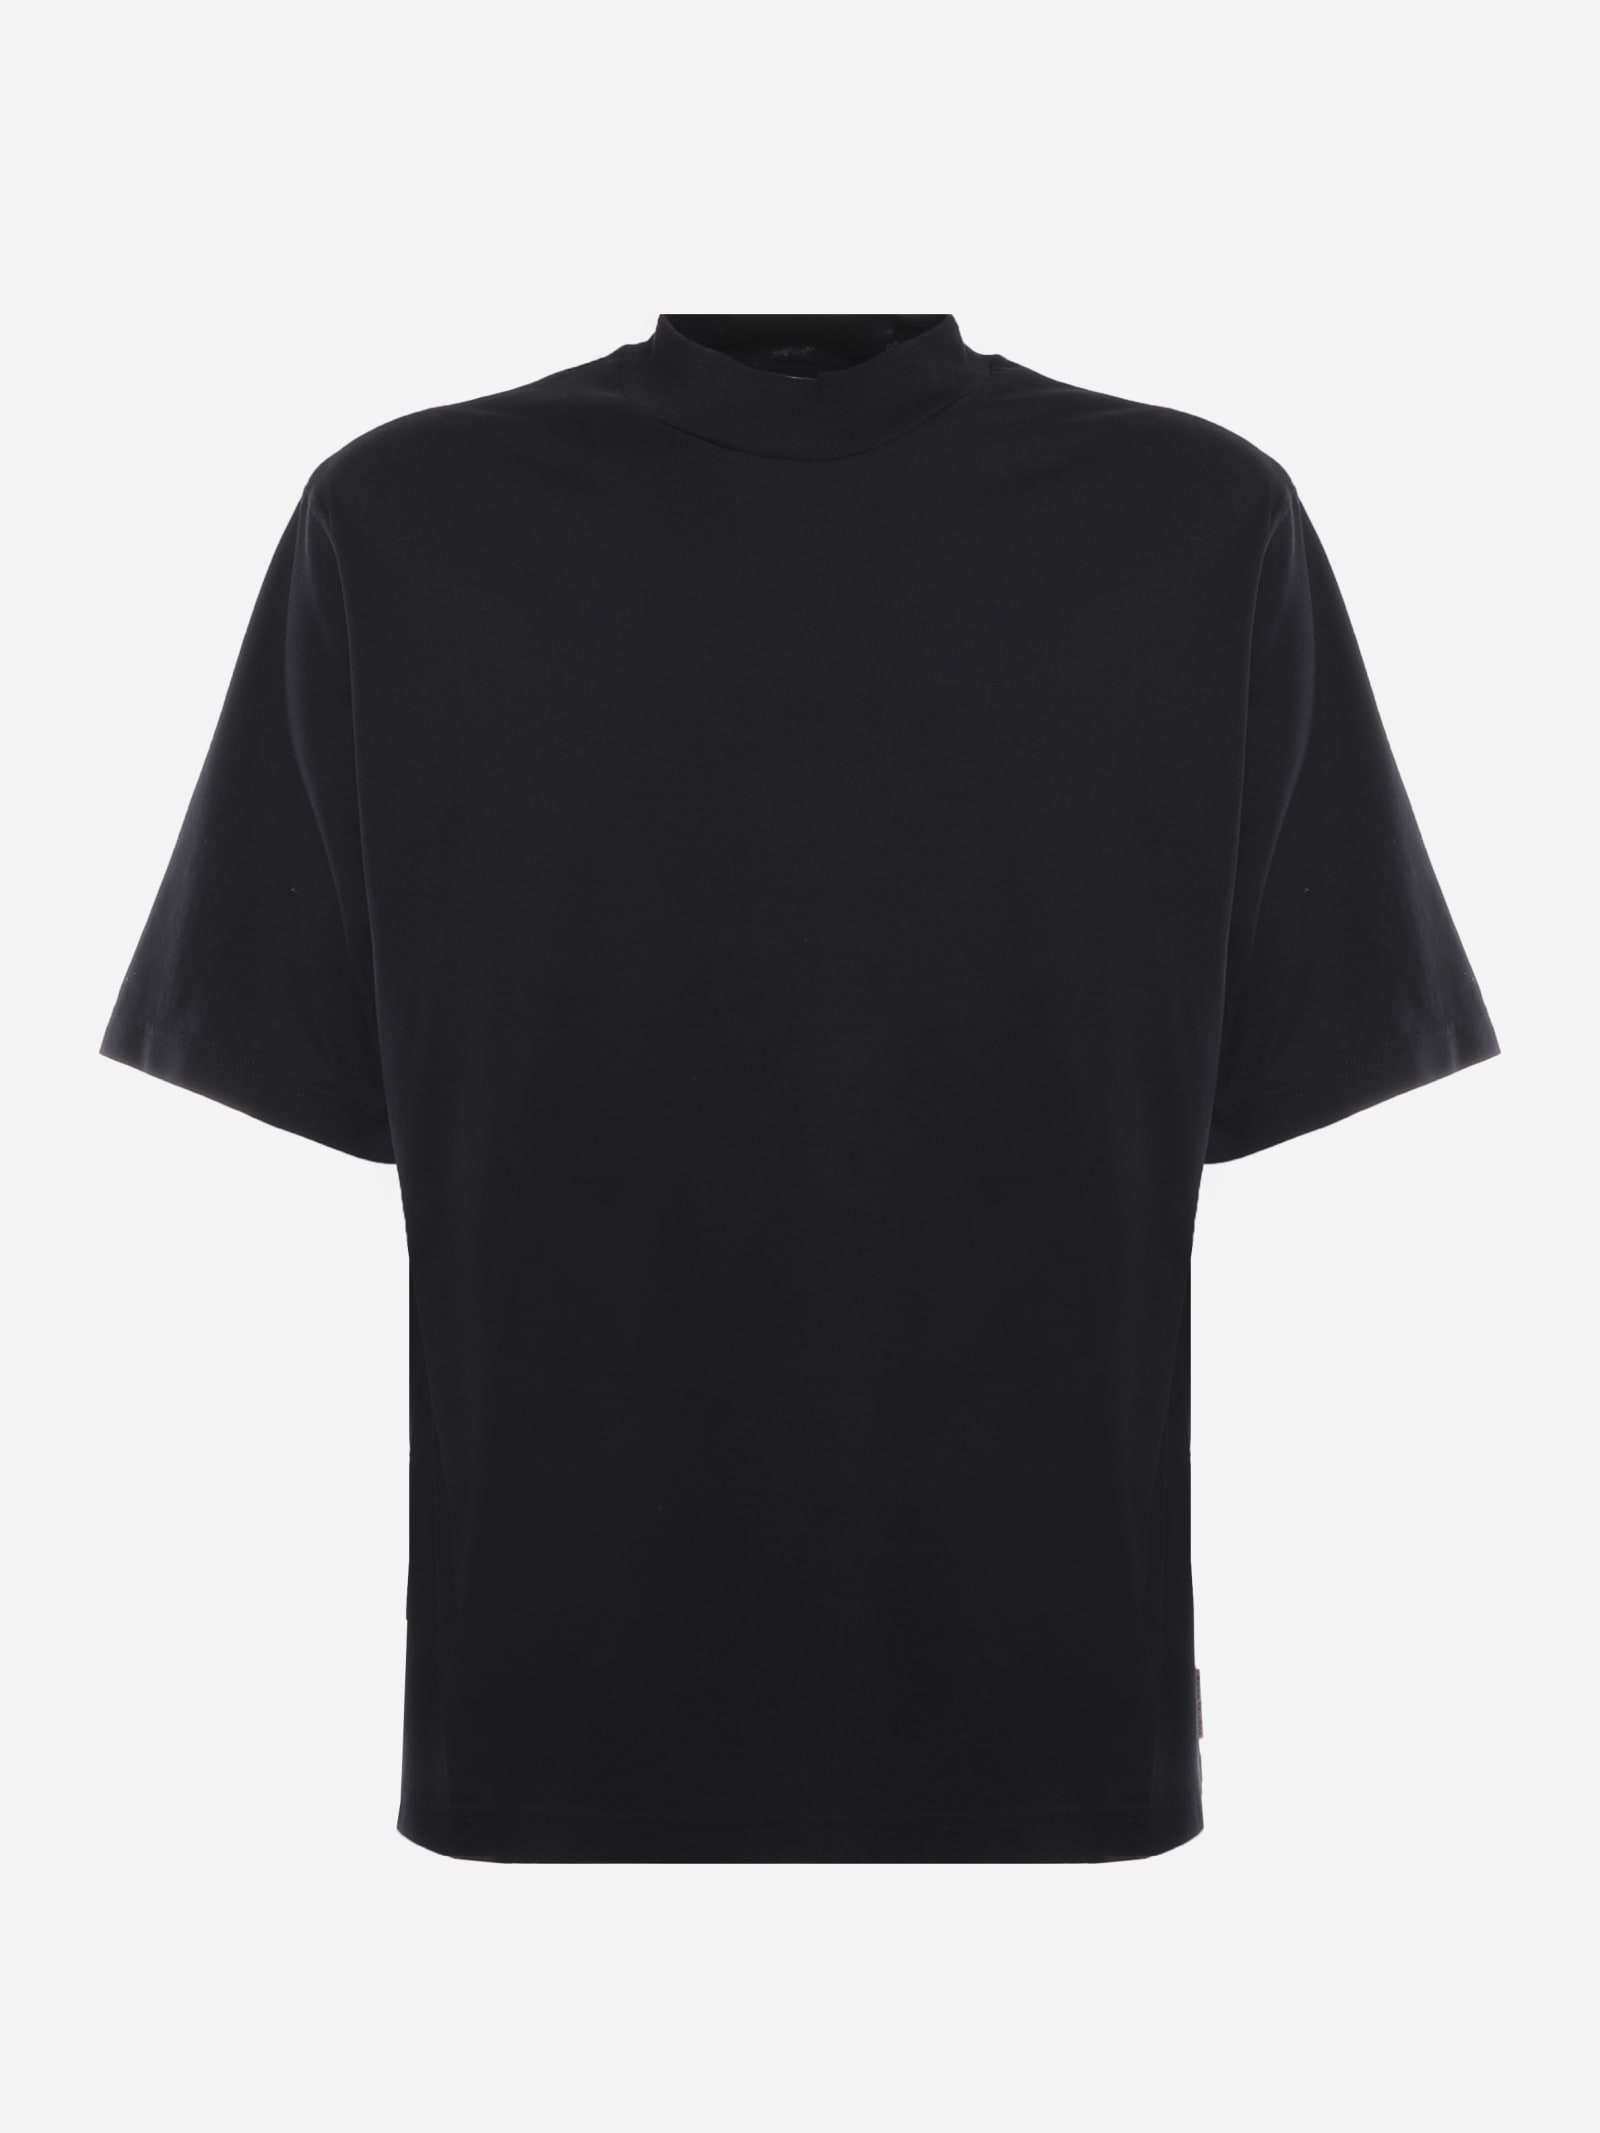 Acne Studios Black Cotton T-shirt With High Collar